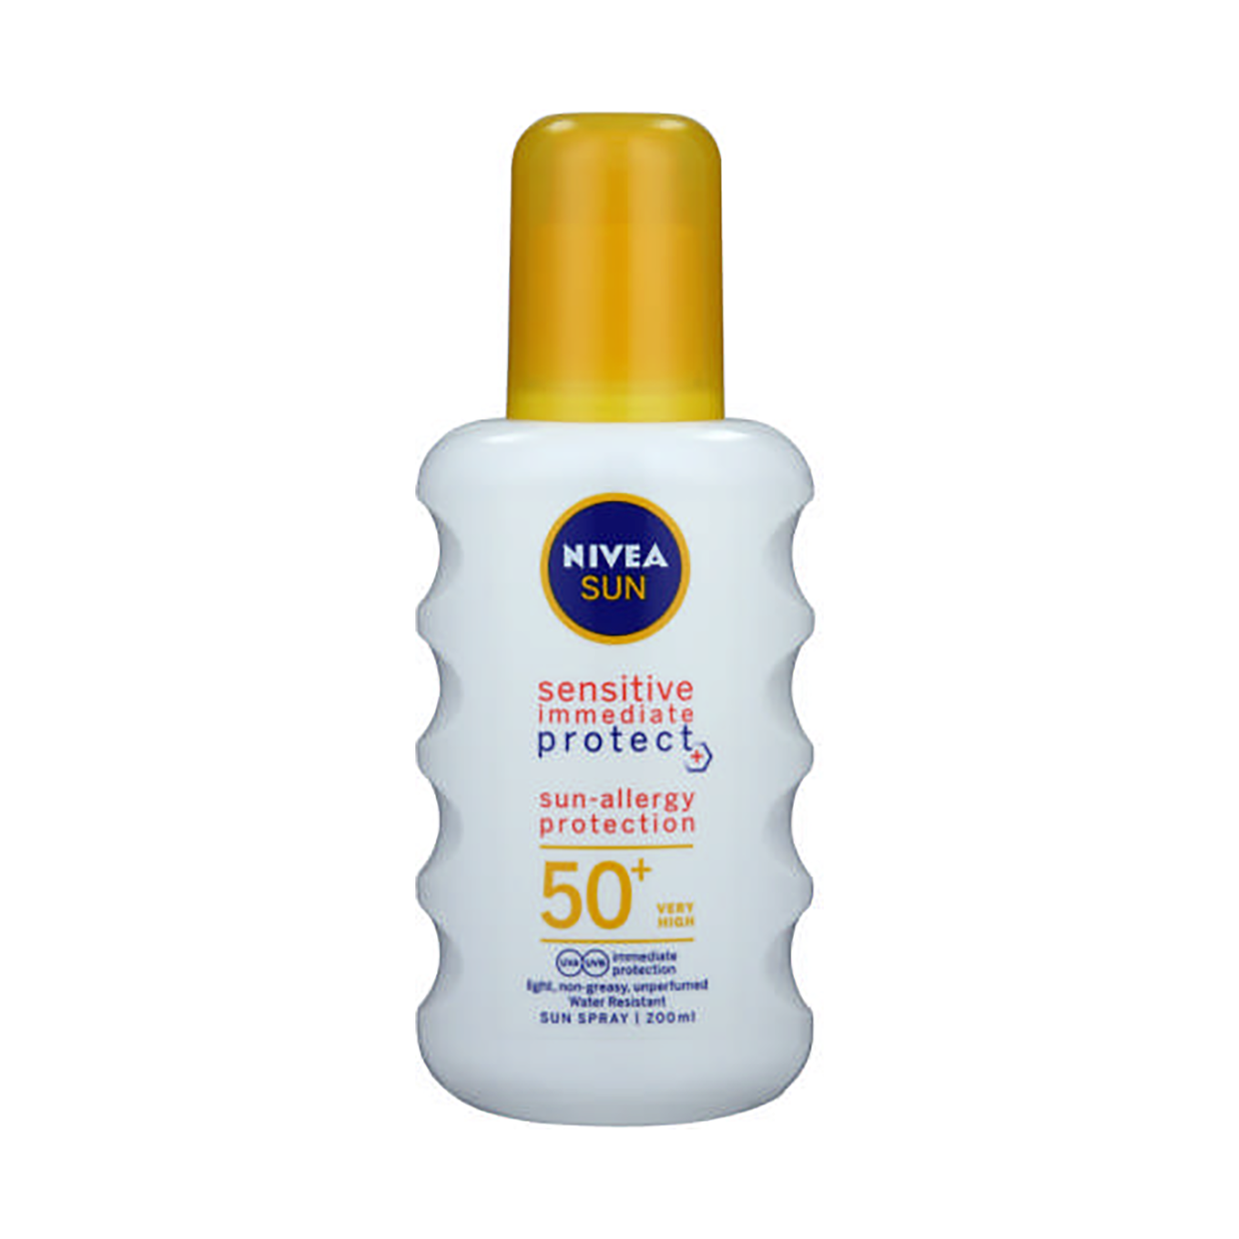 Nivea Sun Sensitive Immediate Protect Spray SPF50+ 200ml - Med365